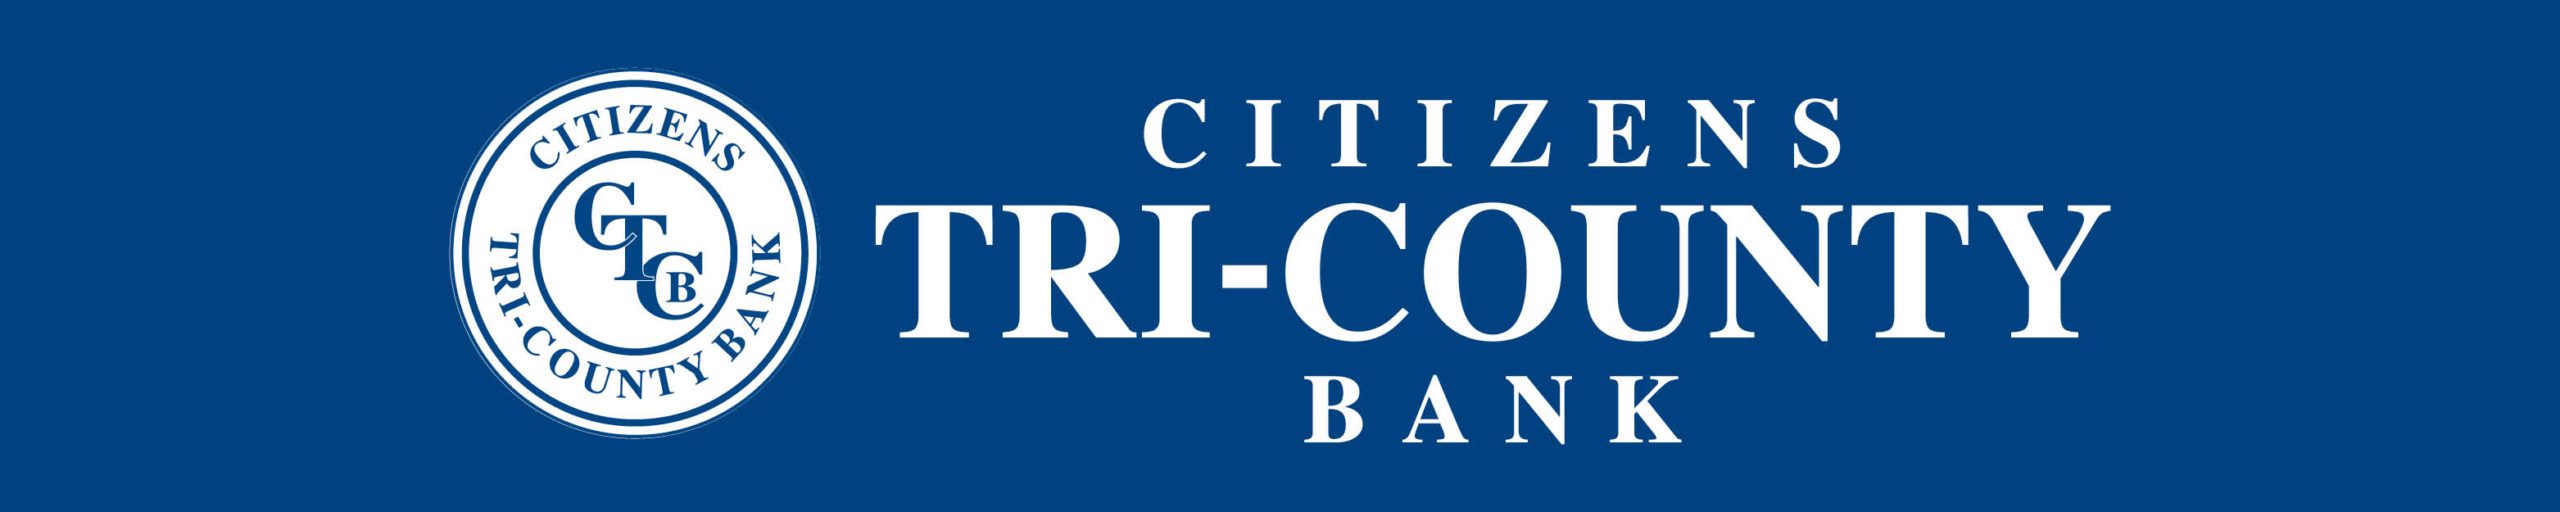 Citizen's Tri-County Bank Ad